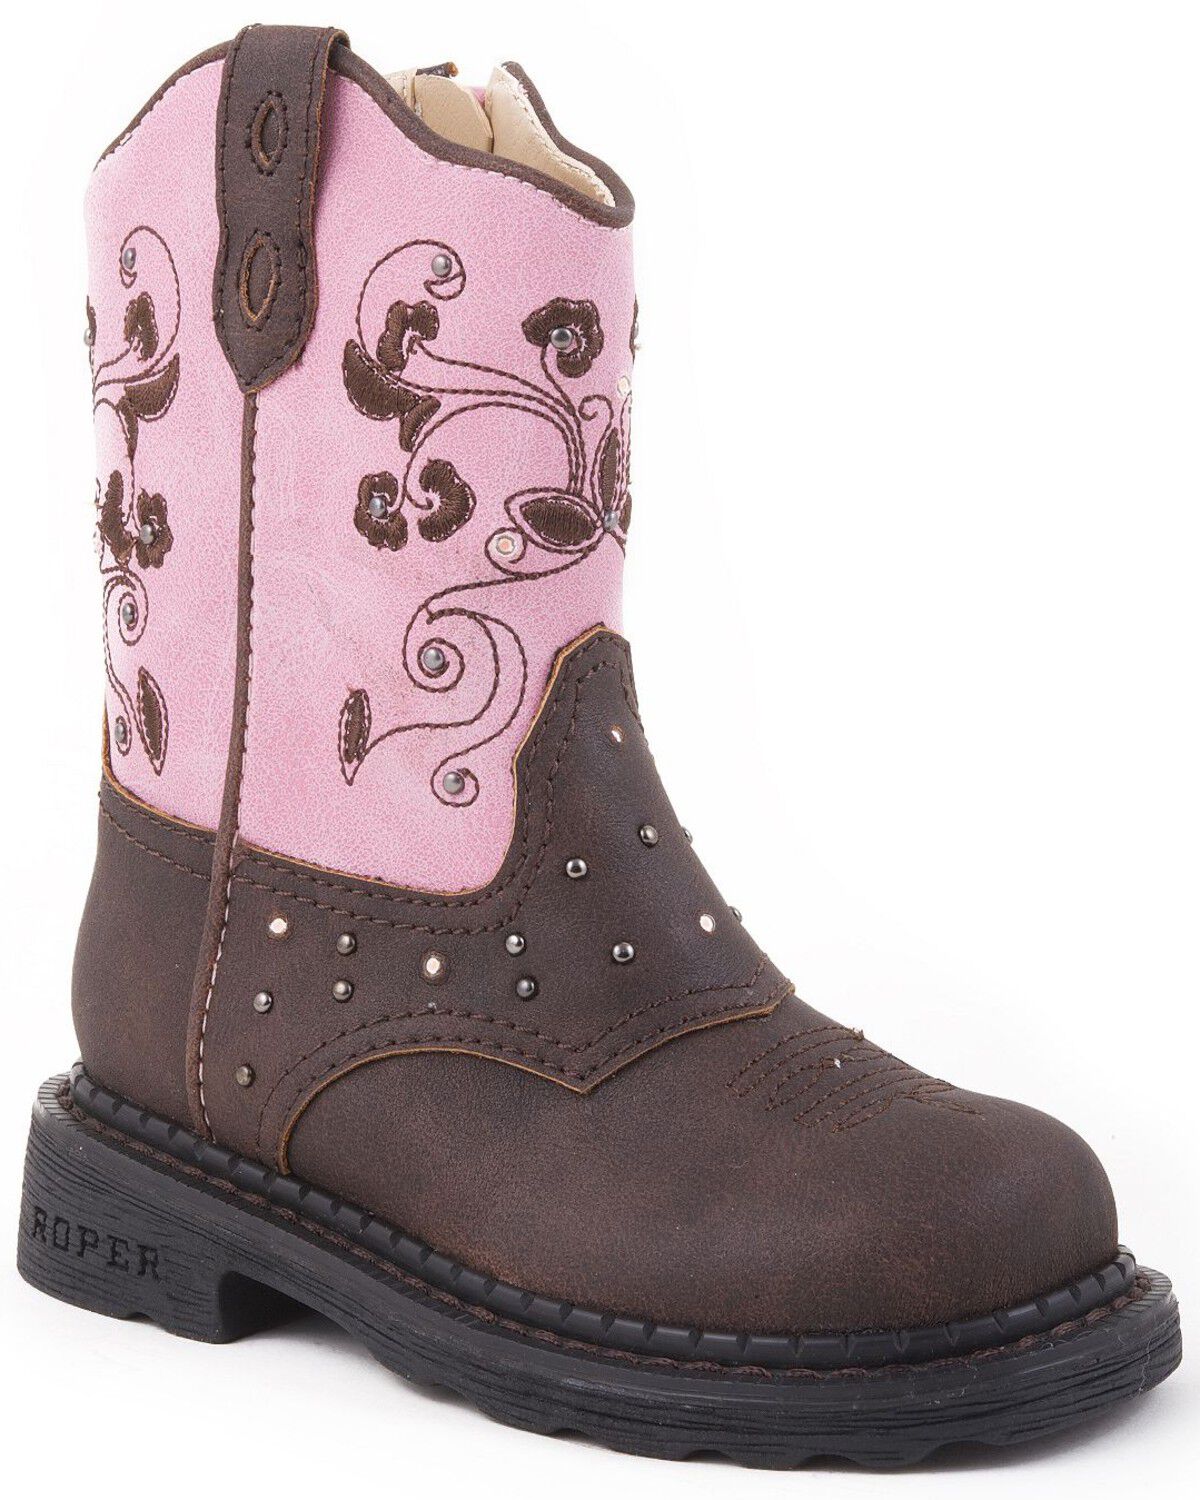 roper boots for girls